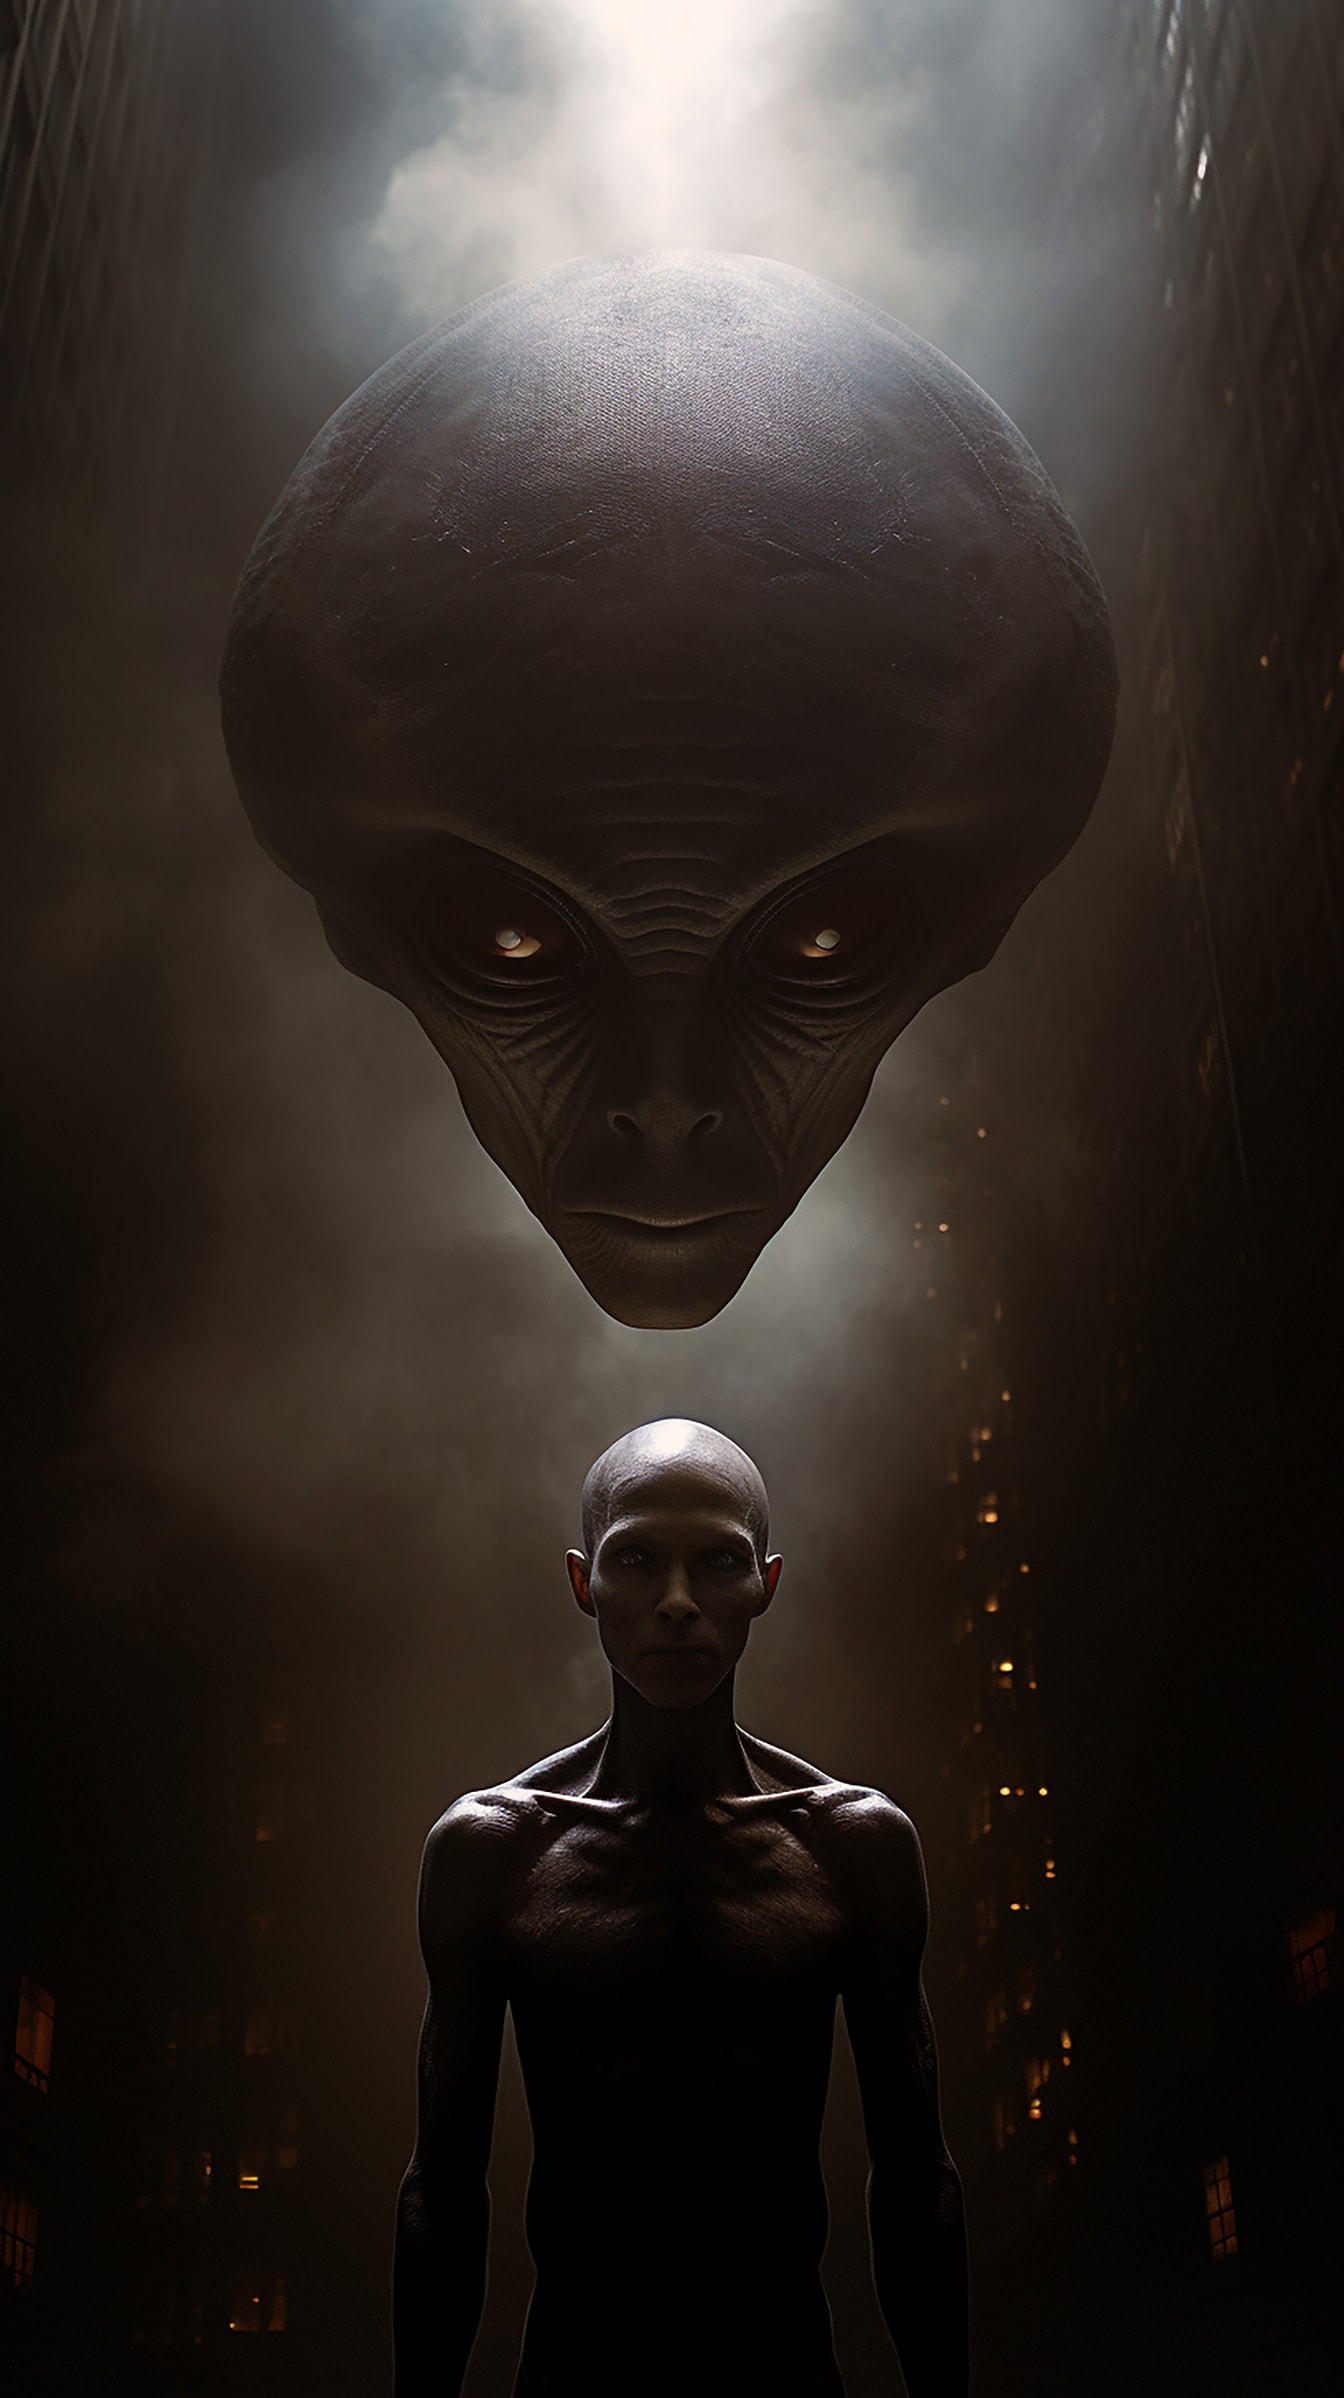 Big alien head with humanoid creature underneath